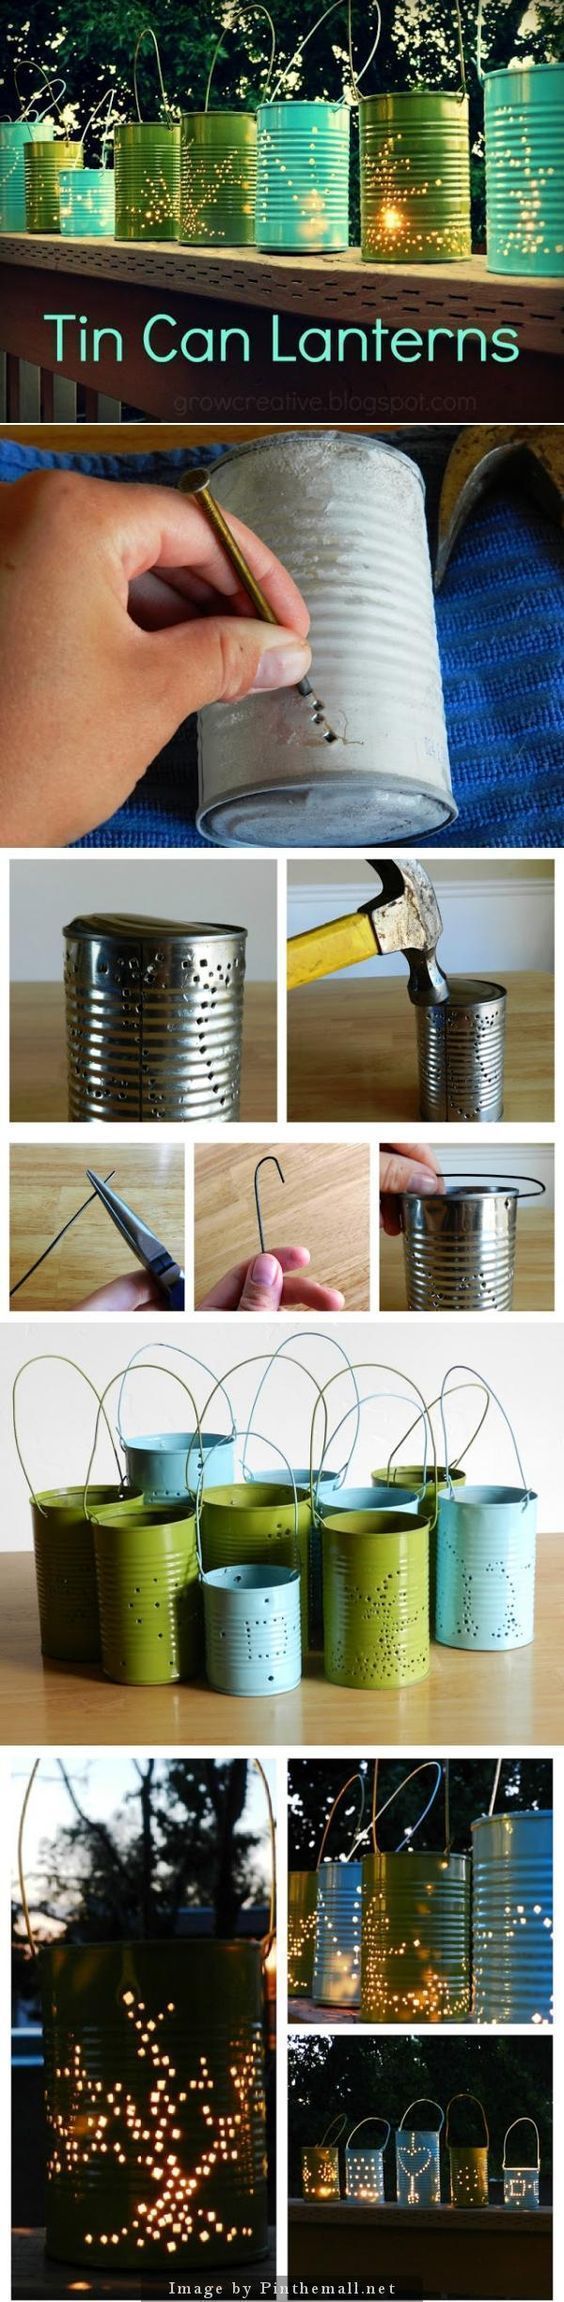 nice DIY Tin Can Lanterns Craft… by http://www.danazhomedecor.top/diy-crafts-home/diy-tin-can-lanterns-craft/